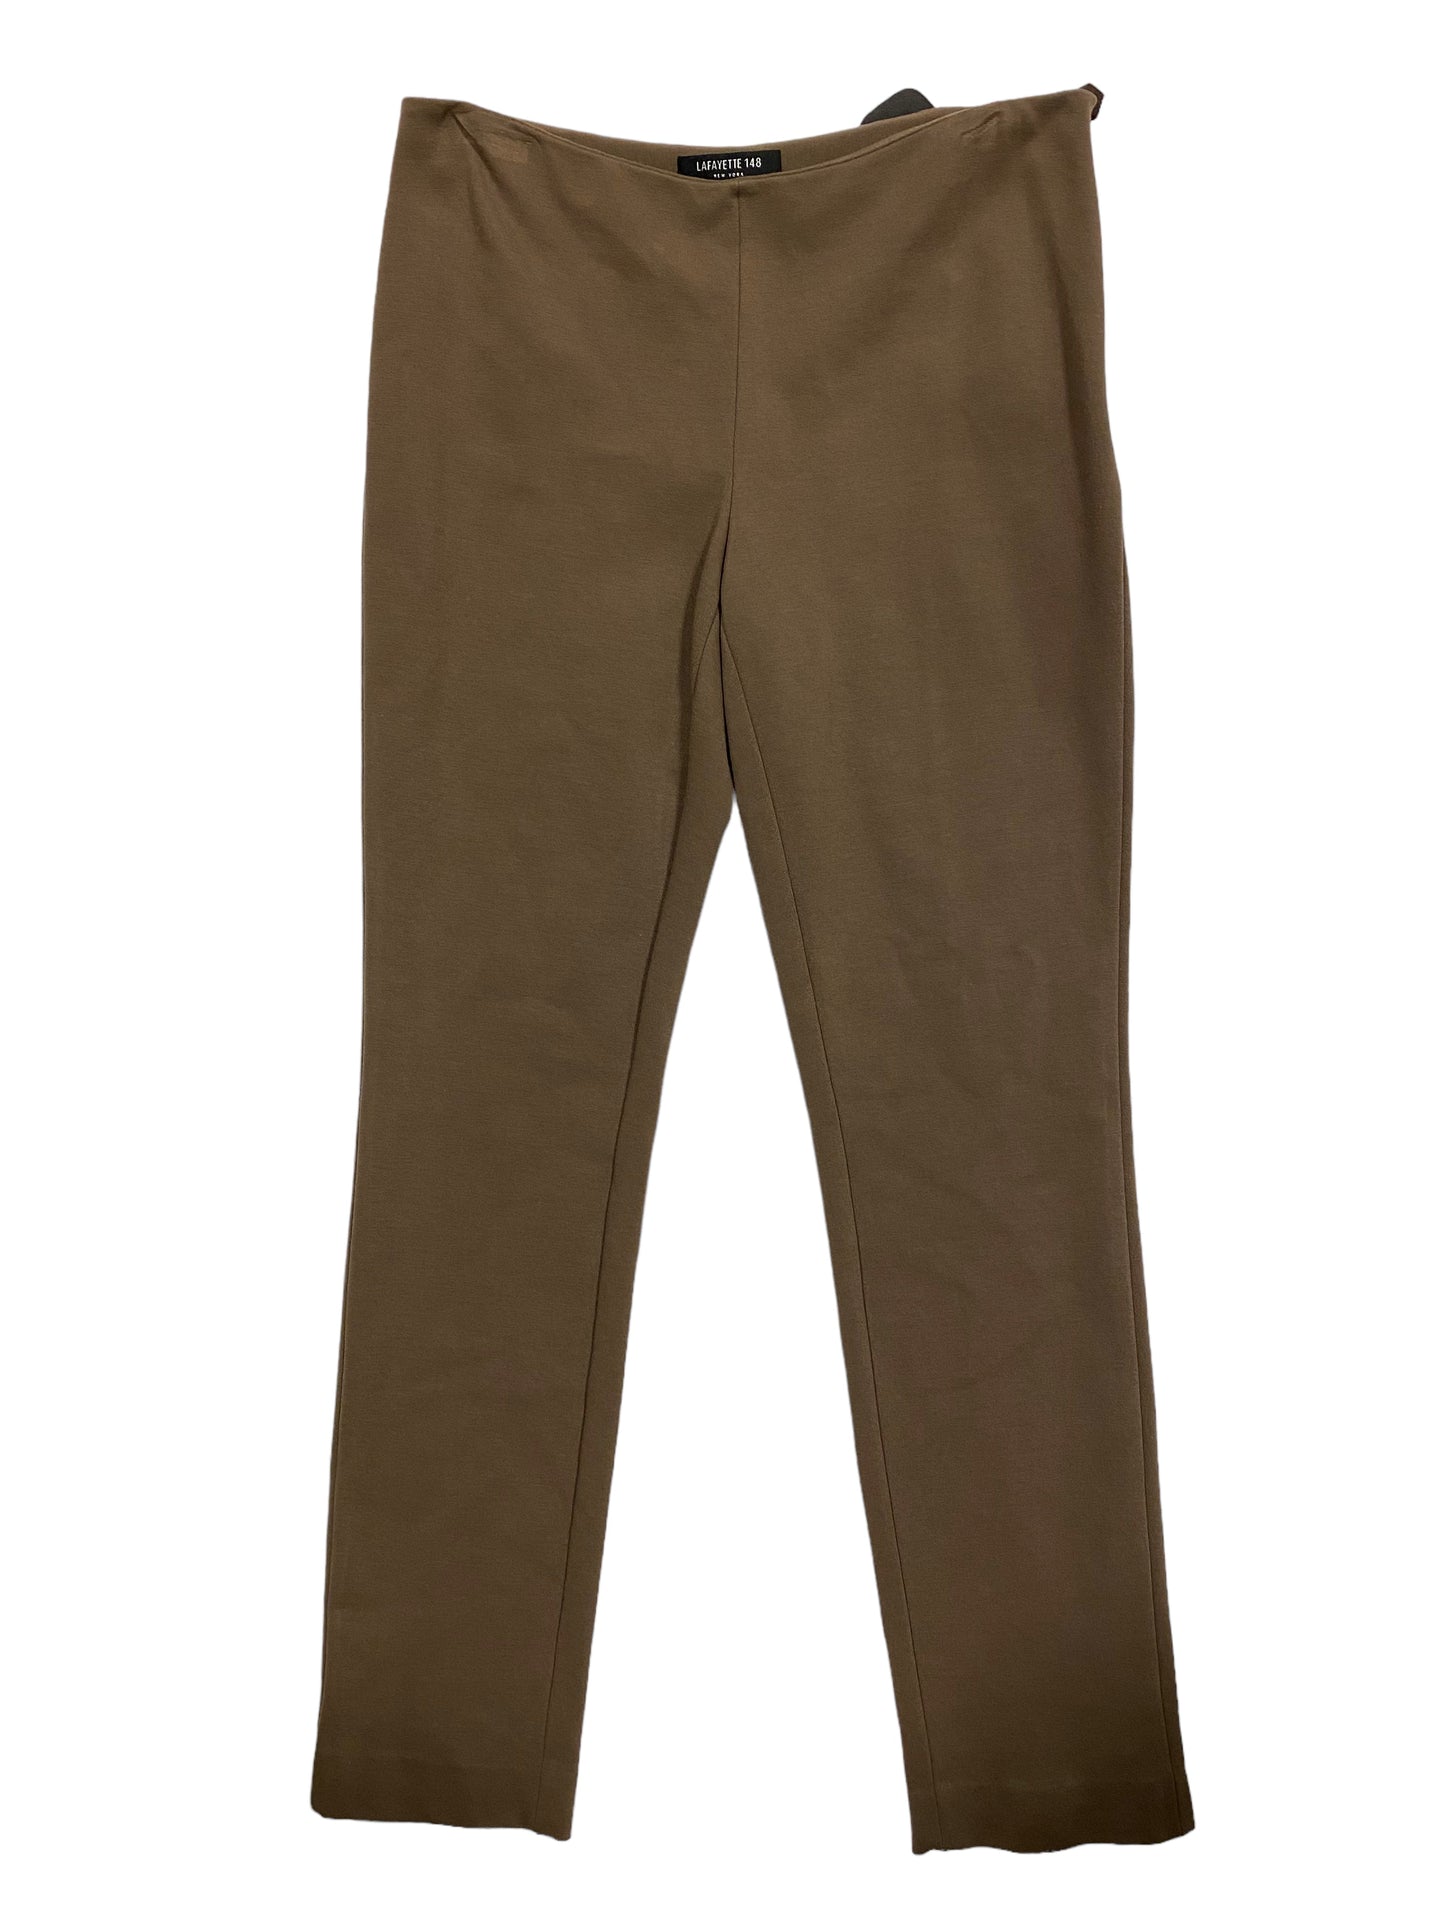 Brown Pants Designer Lafayette 148, Size S